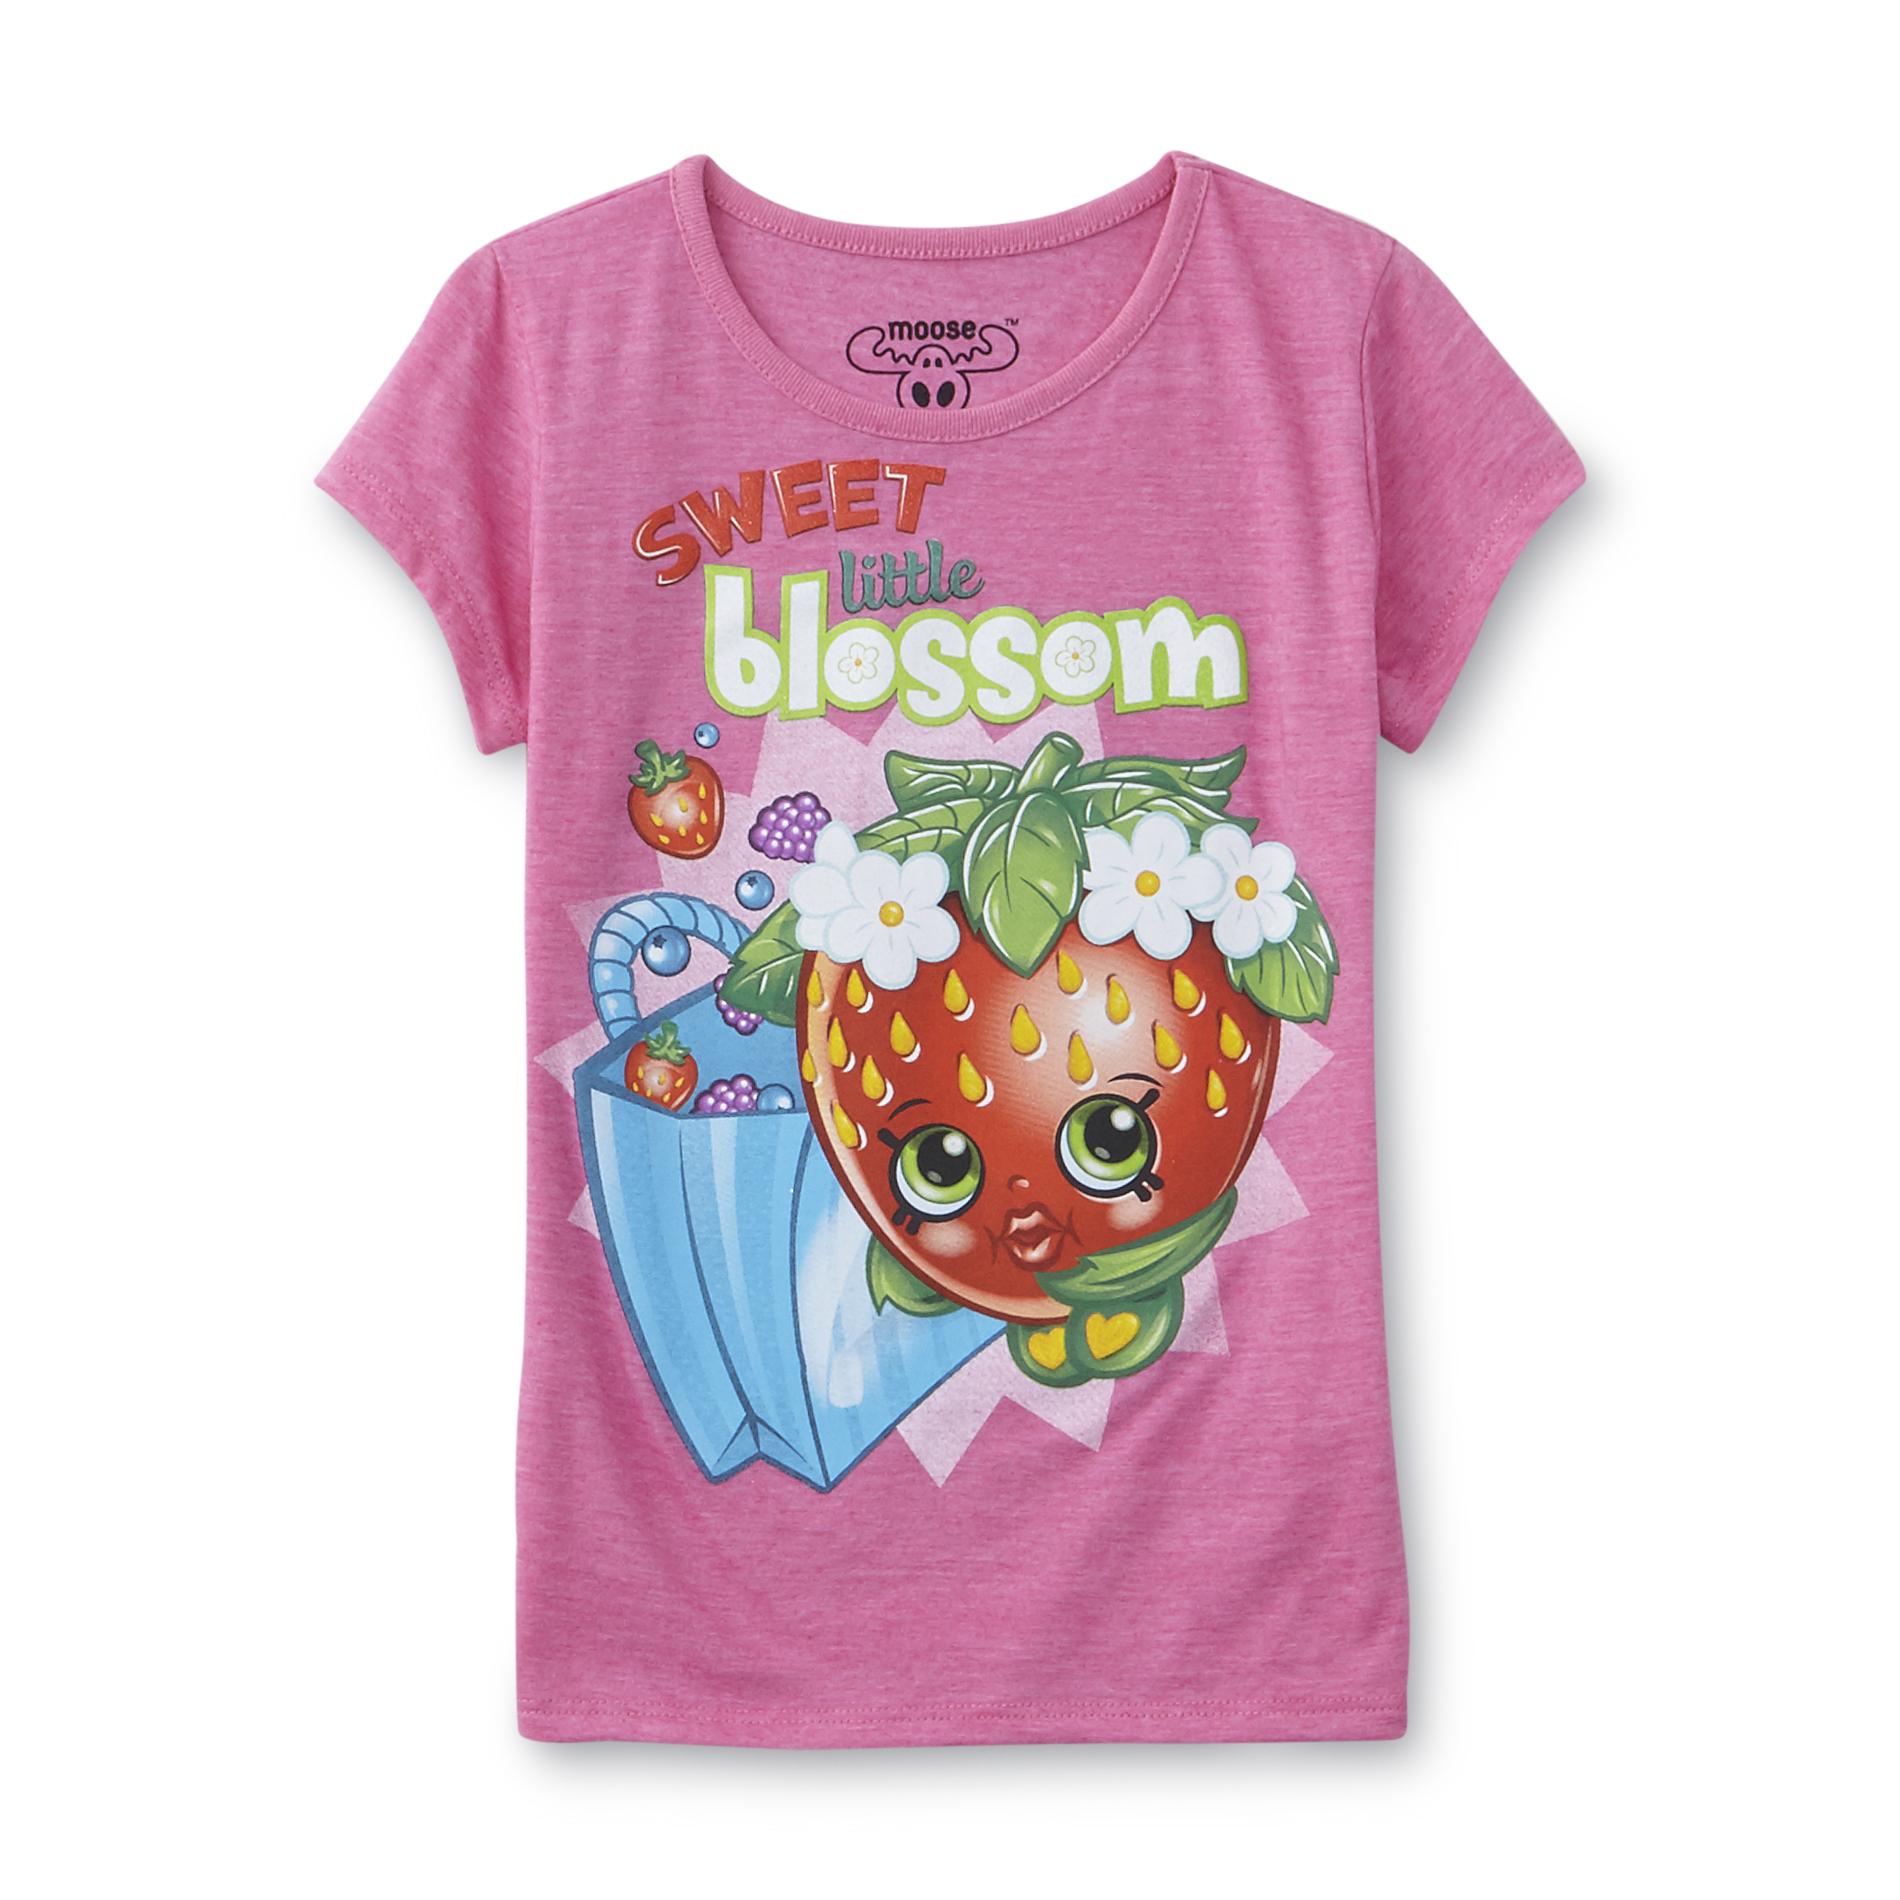 Shopkins Girl's Graphic T-Shirt - Strawberry Kiss